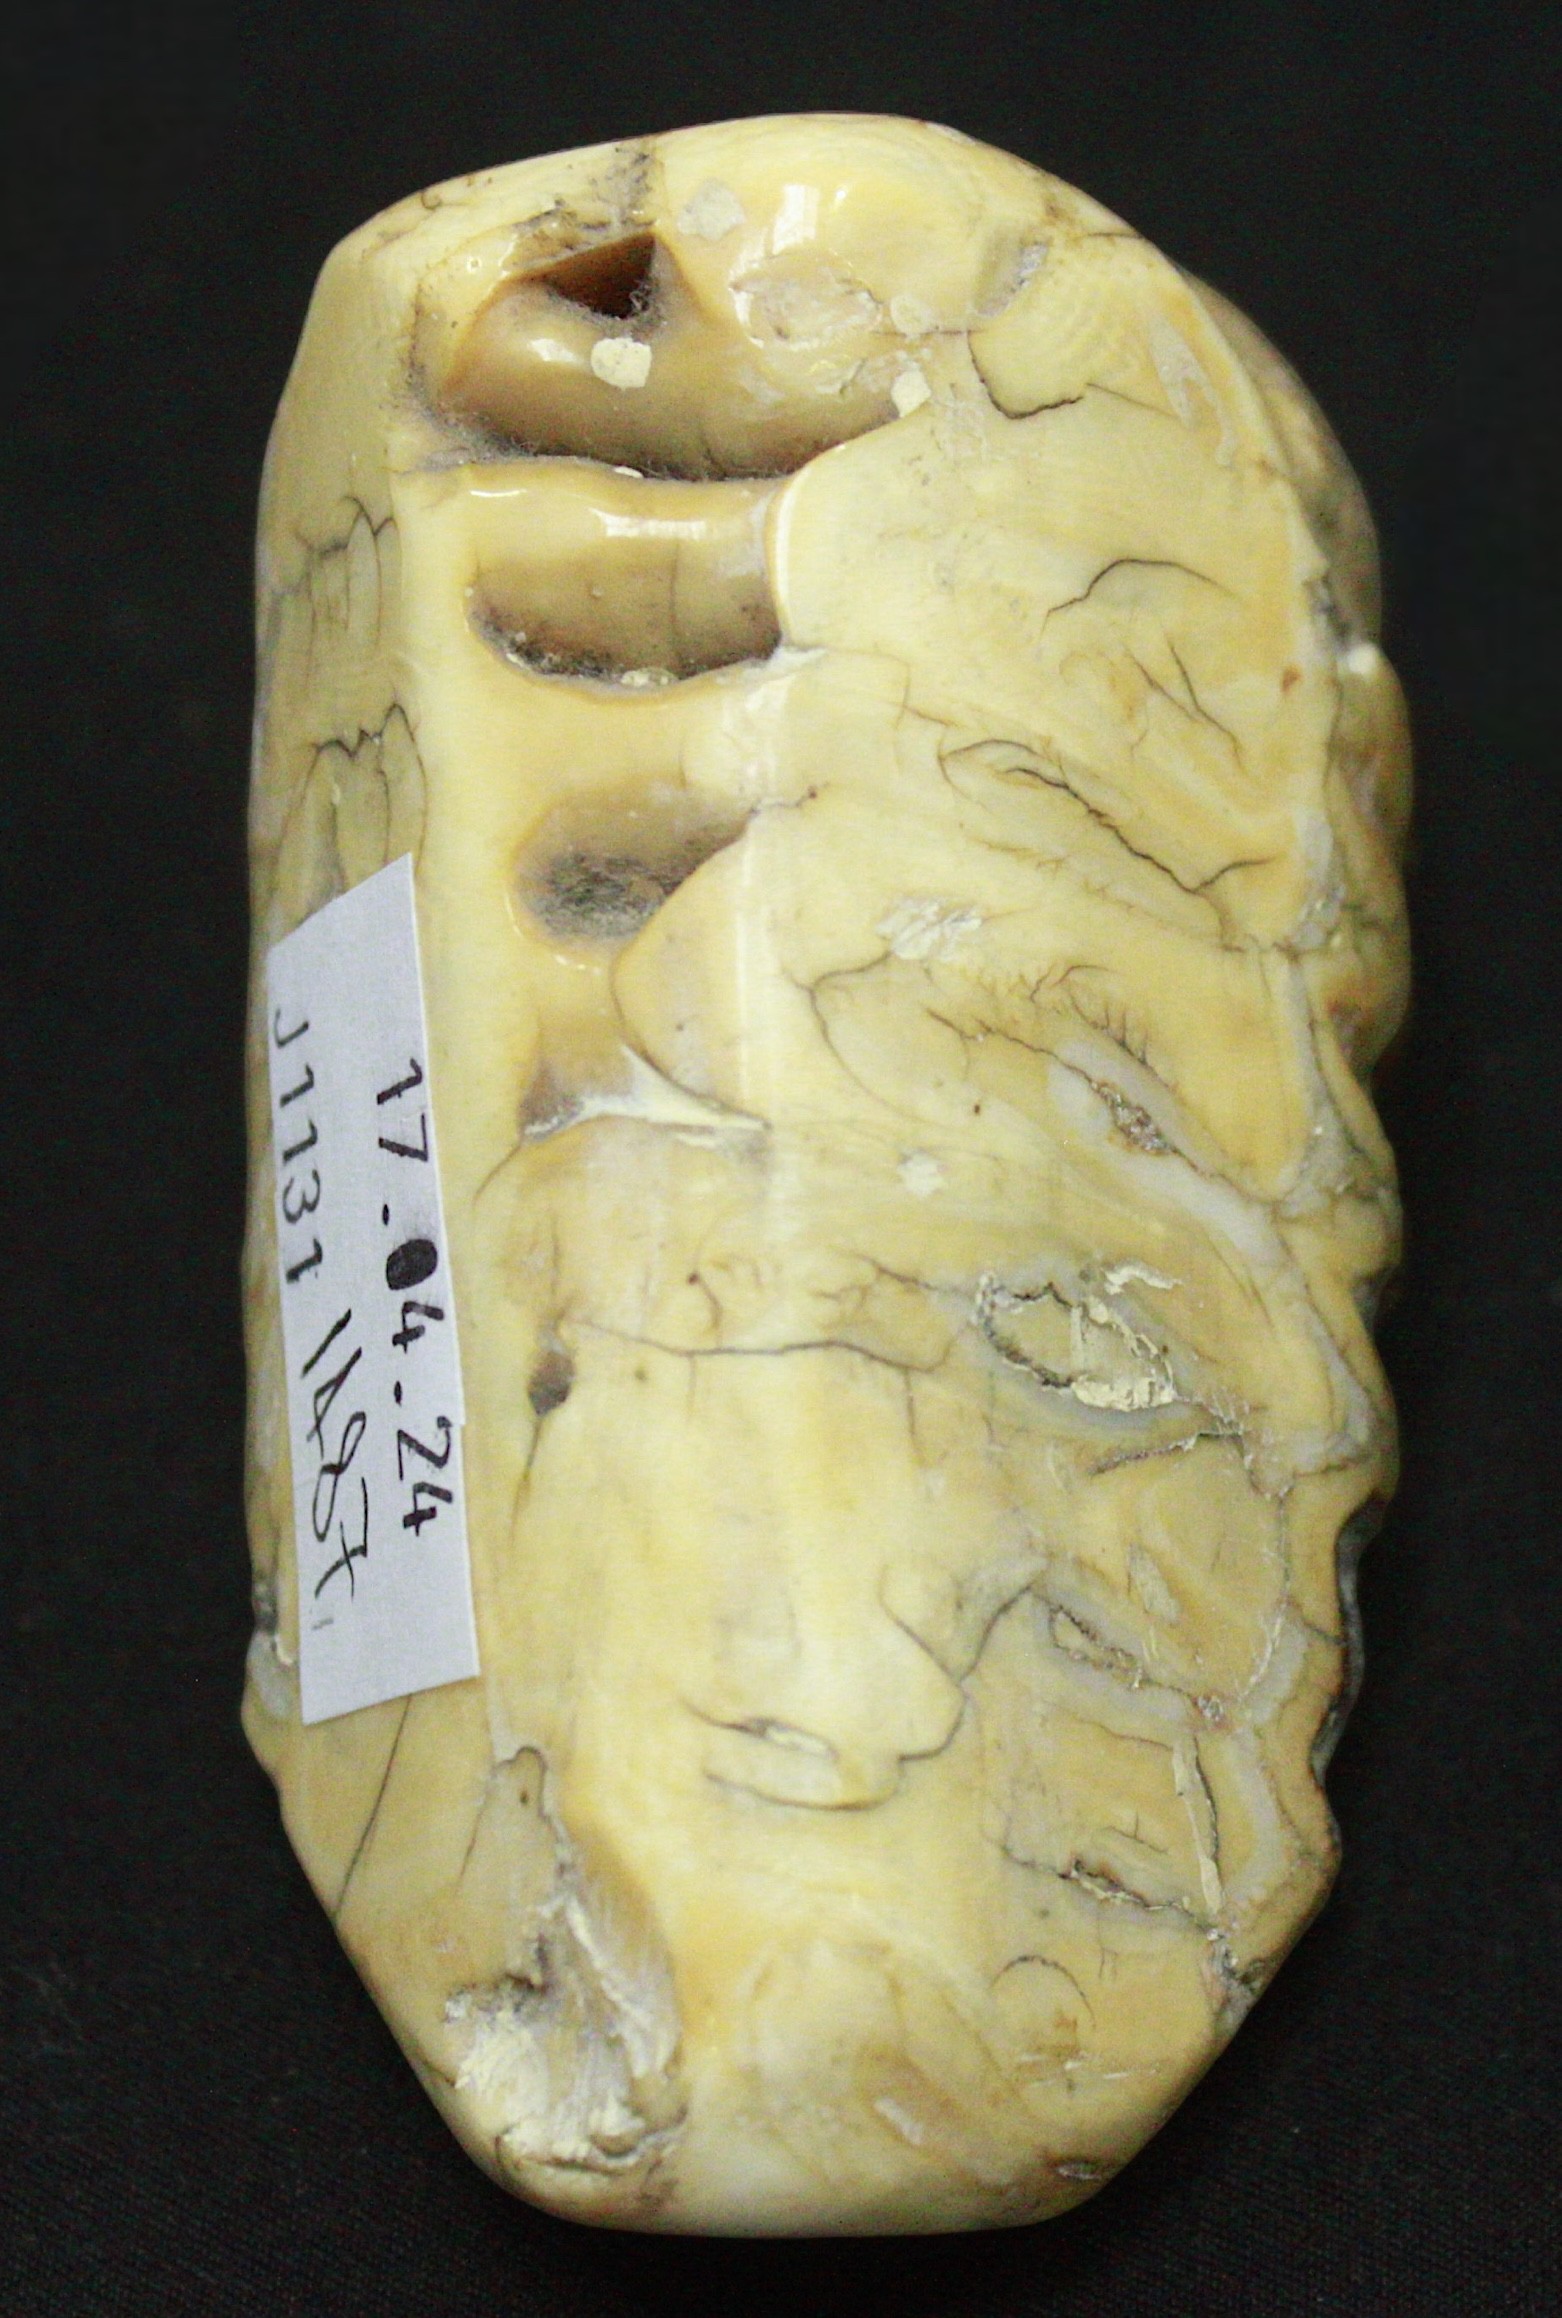 A polished elephant’s tooth, 11cm - Image 3 of 3